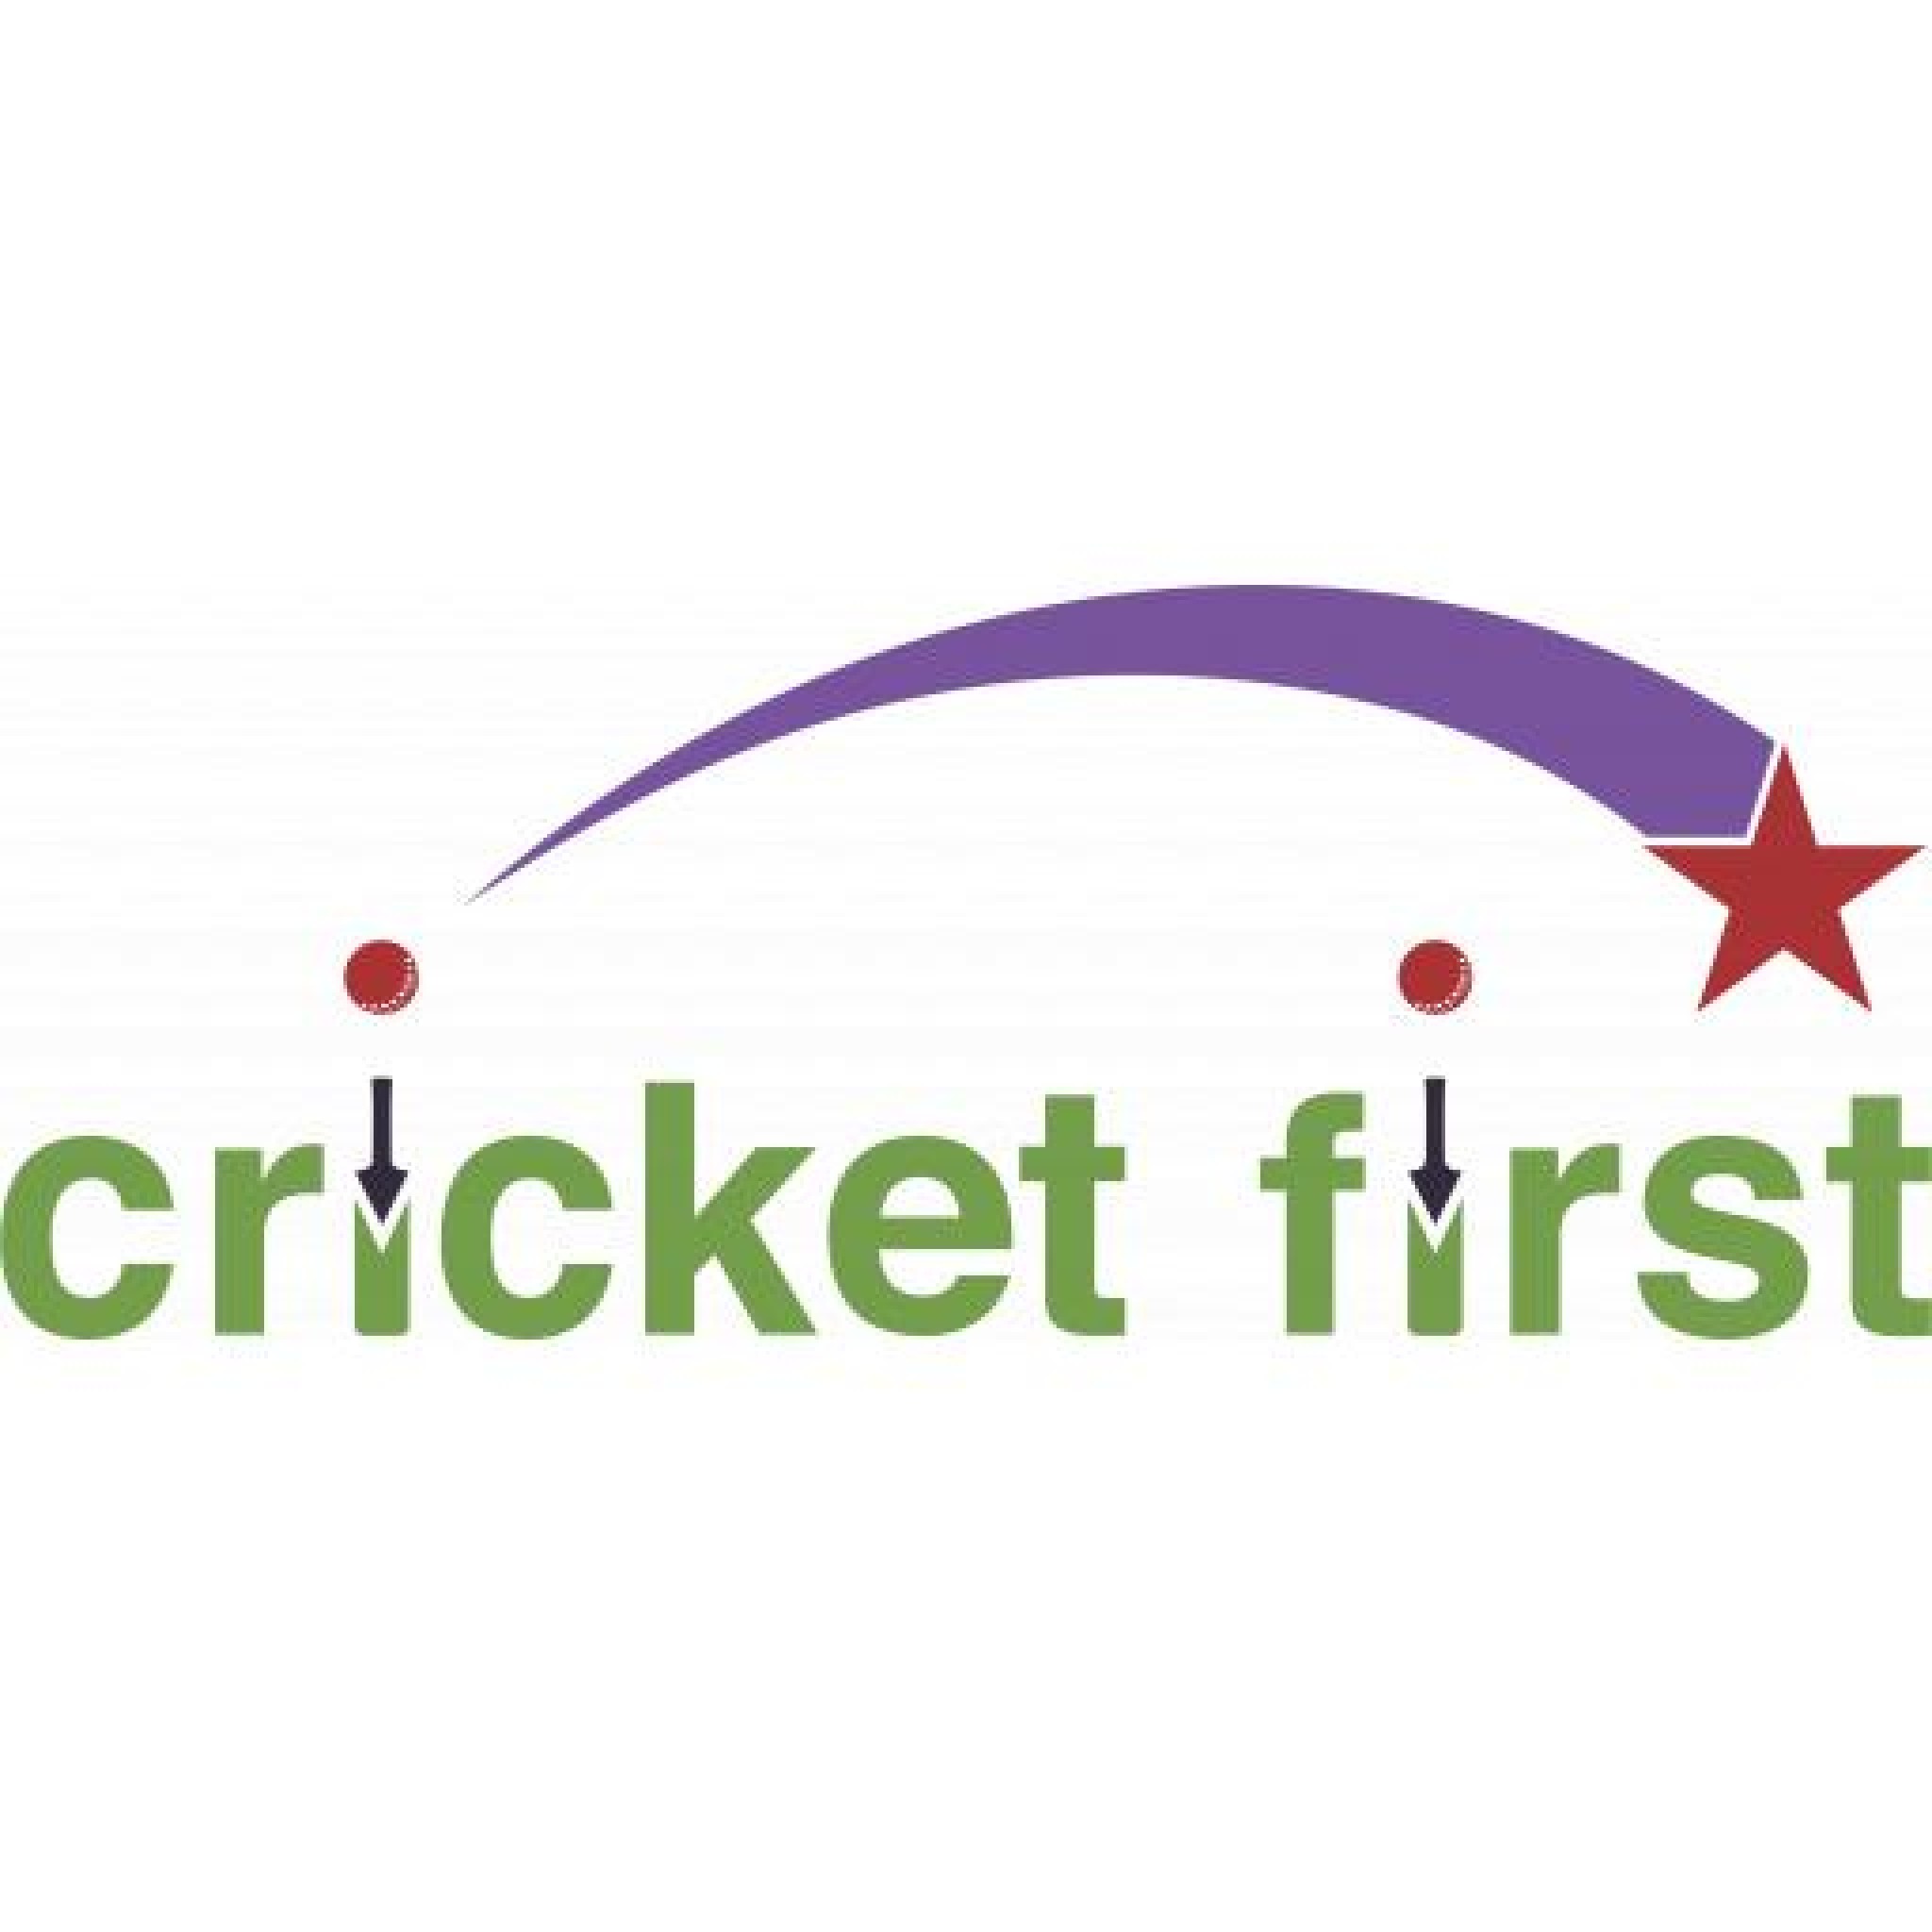 cricket first CC.jpg